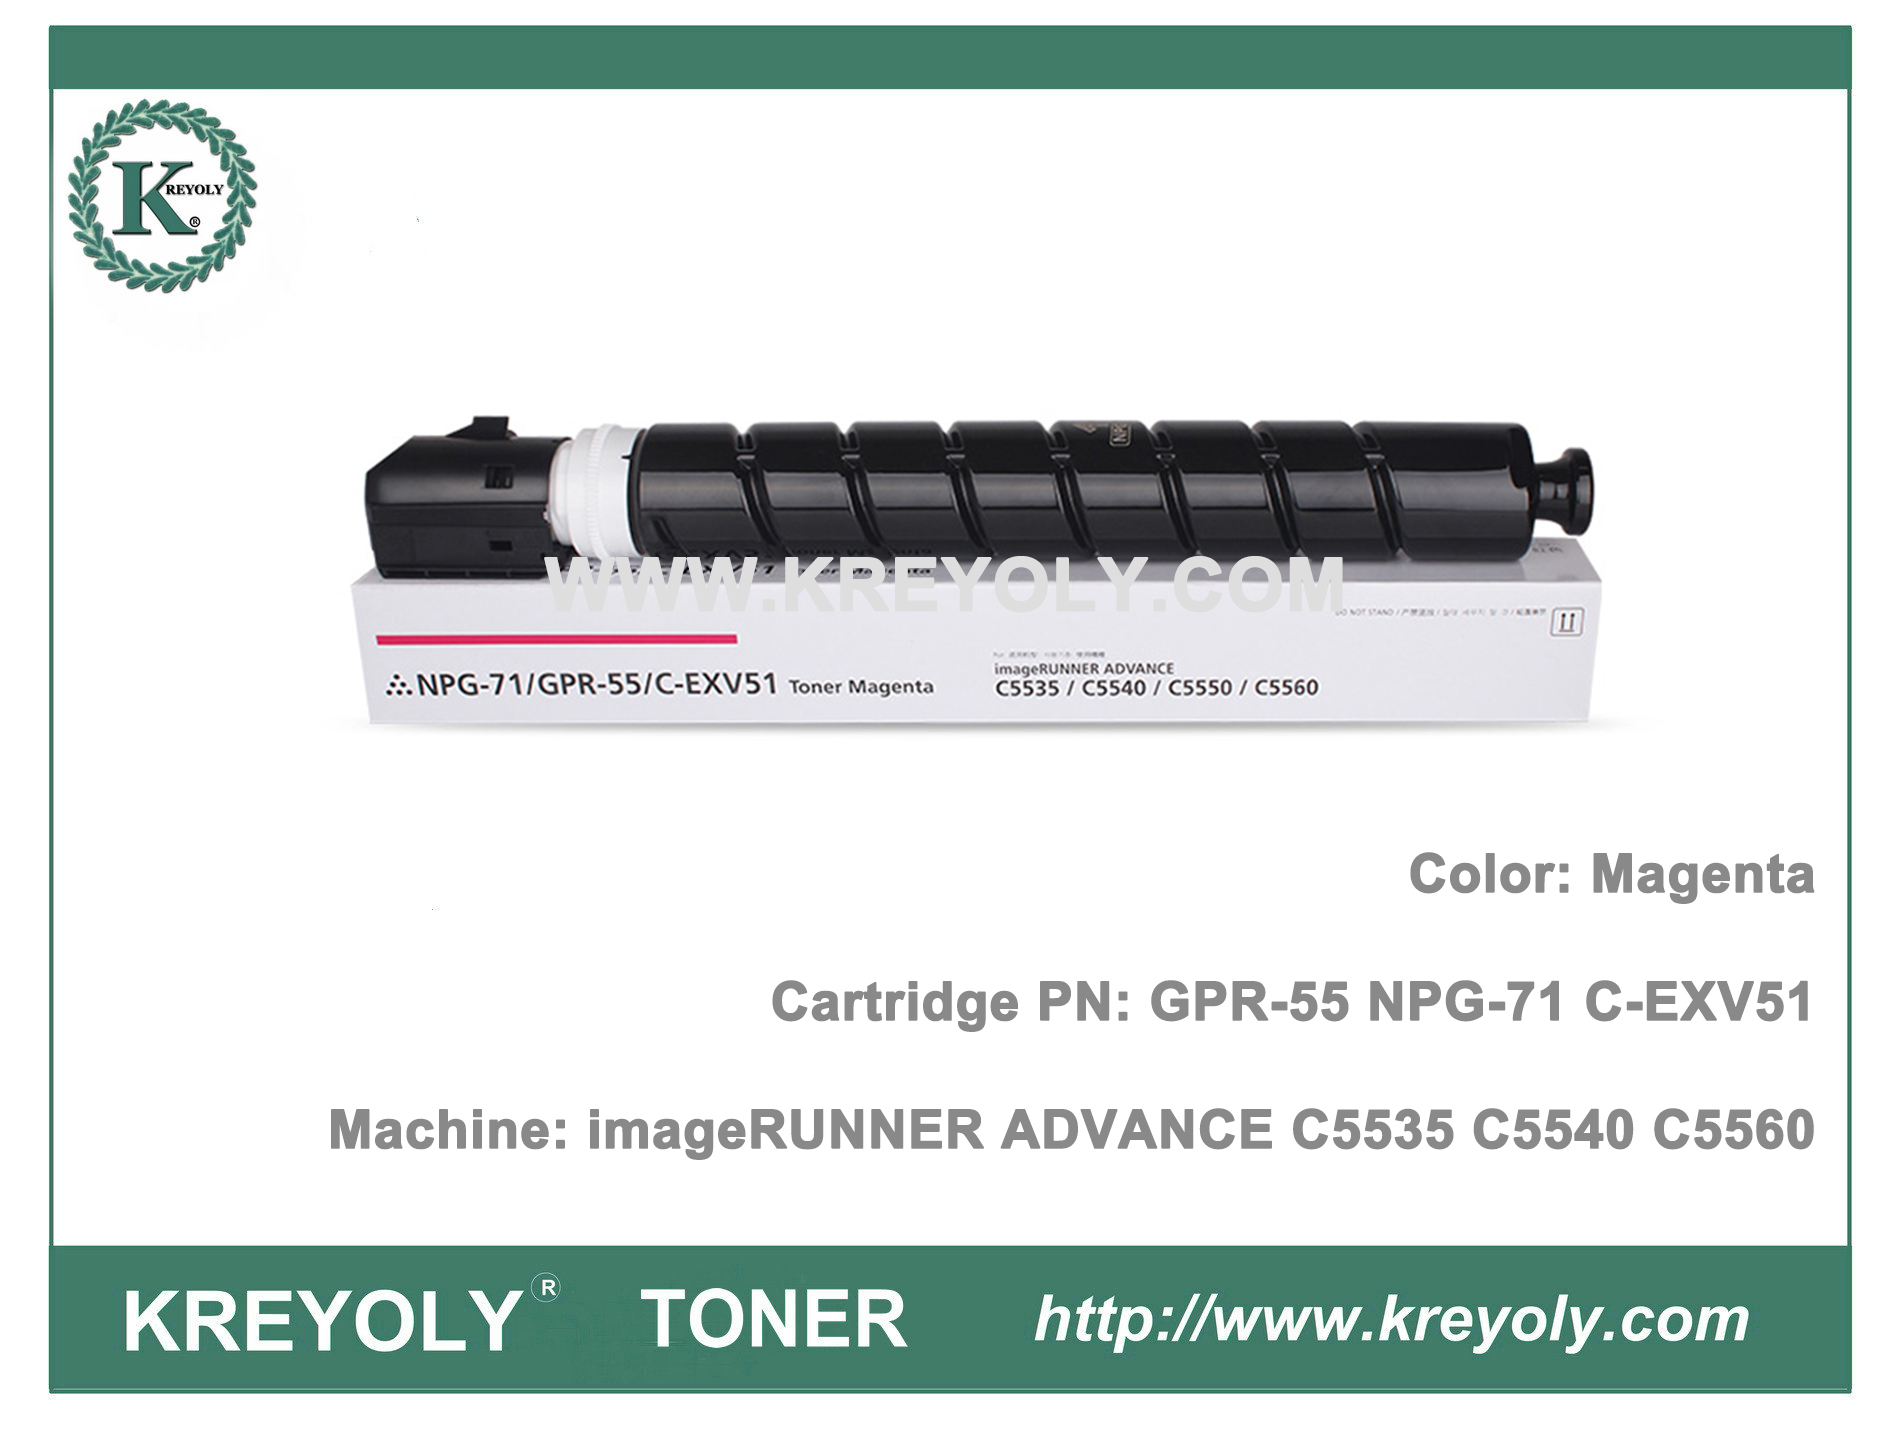 NPG71 GPR55 C-EXV51 Cartucho de tóner para imageRunner ADVANCE C5560 C5550 C5540 C5535